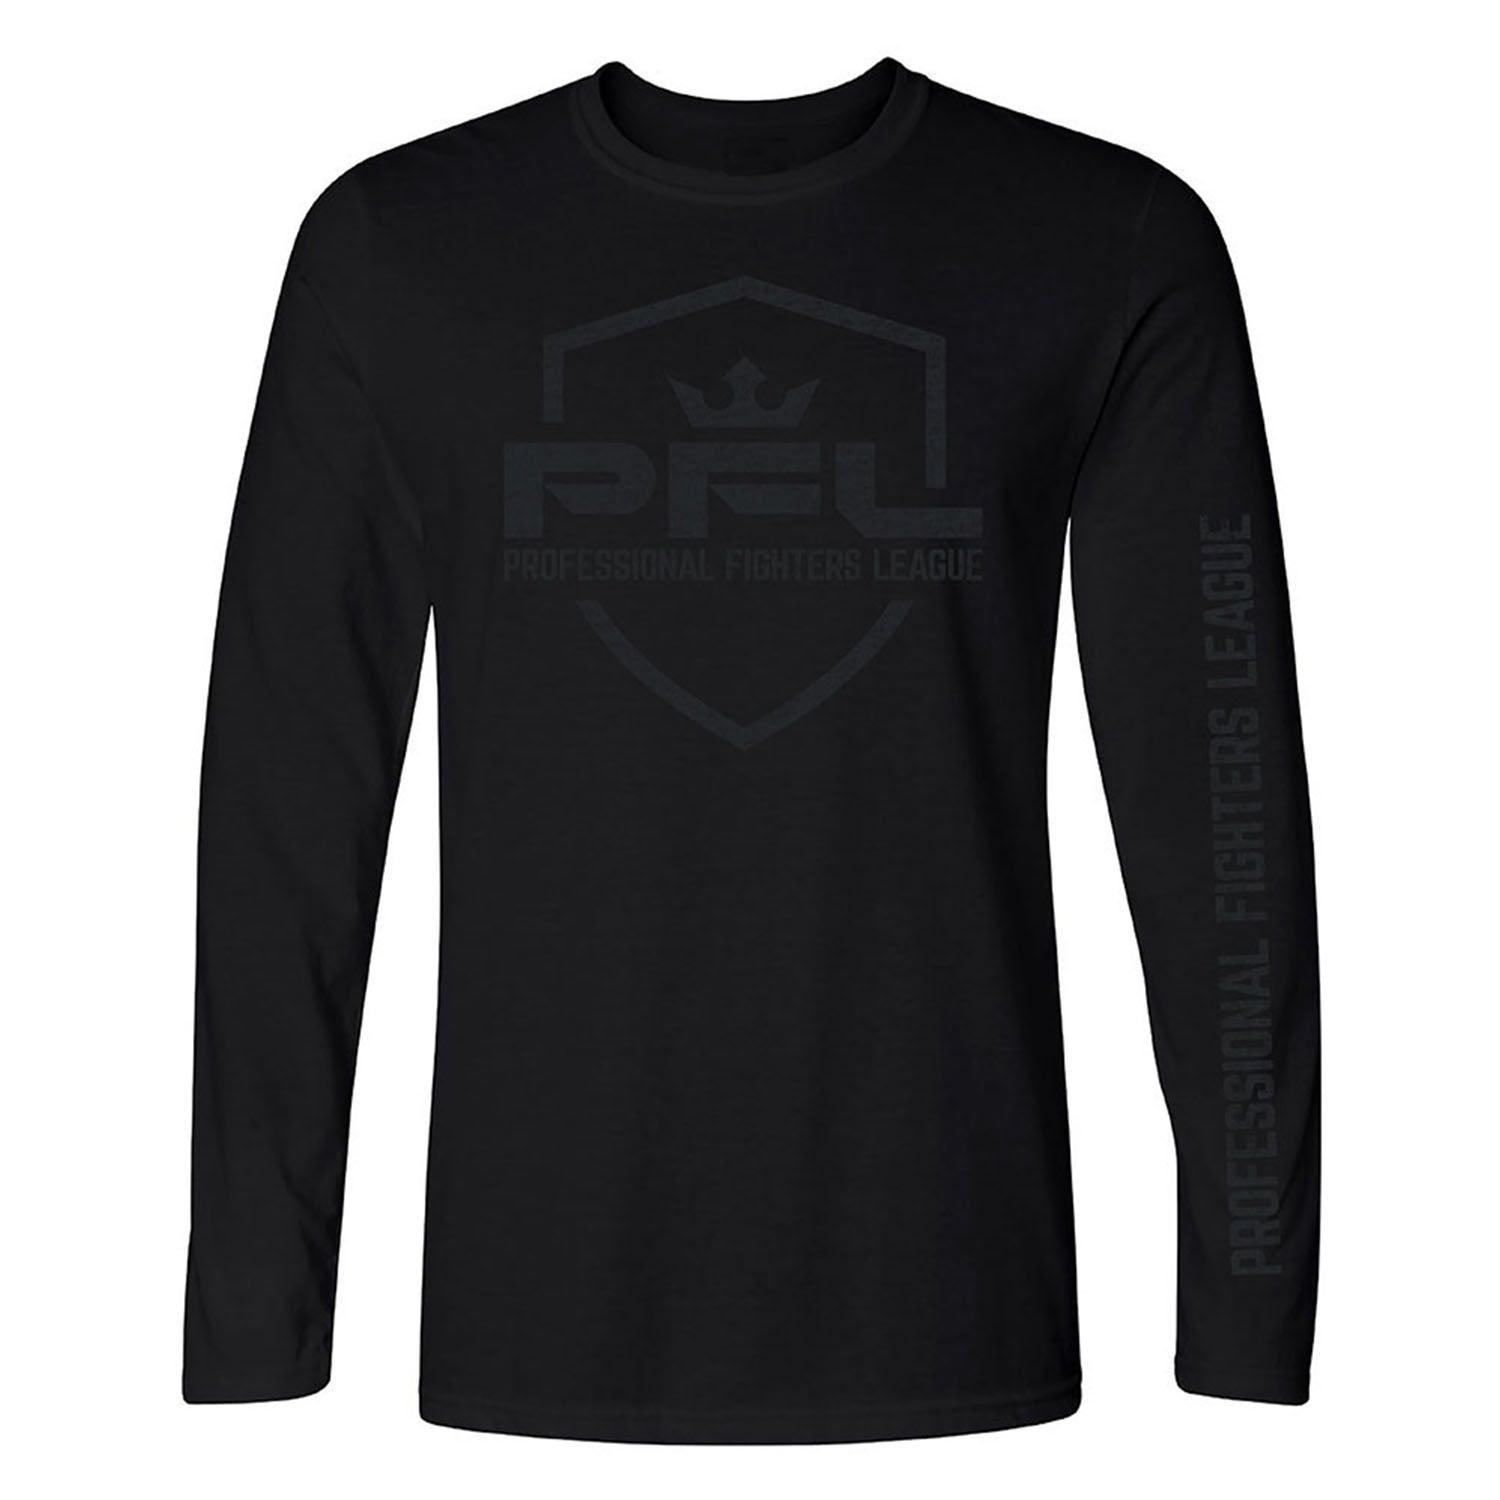 PFL Tonal Logo Long-Sleeve T-Shirt in Black - Front View